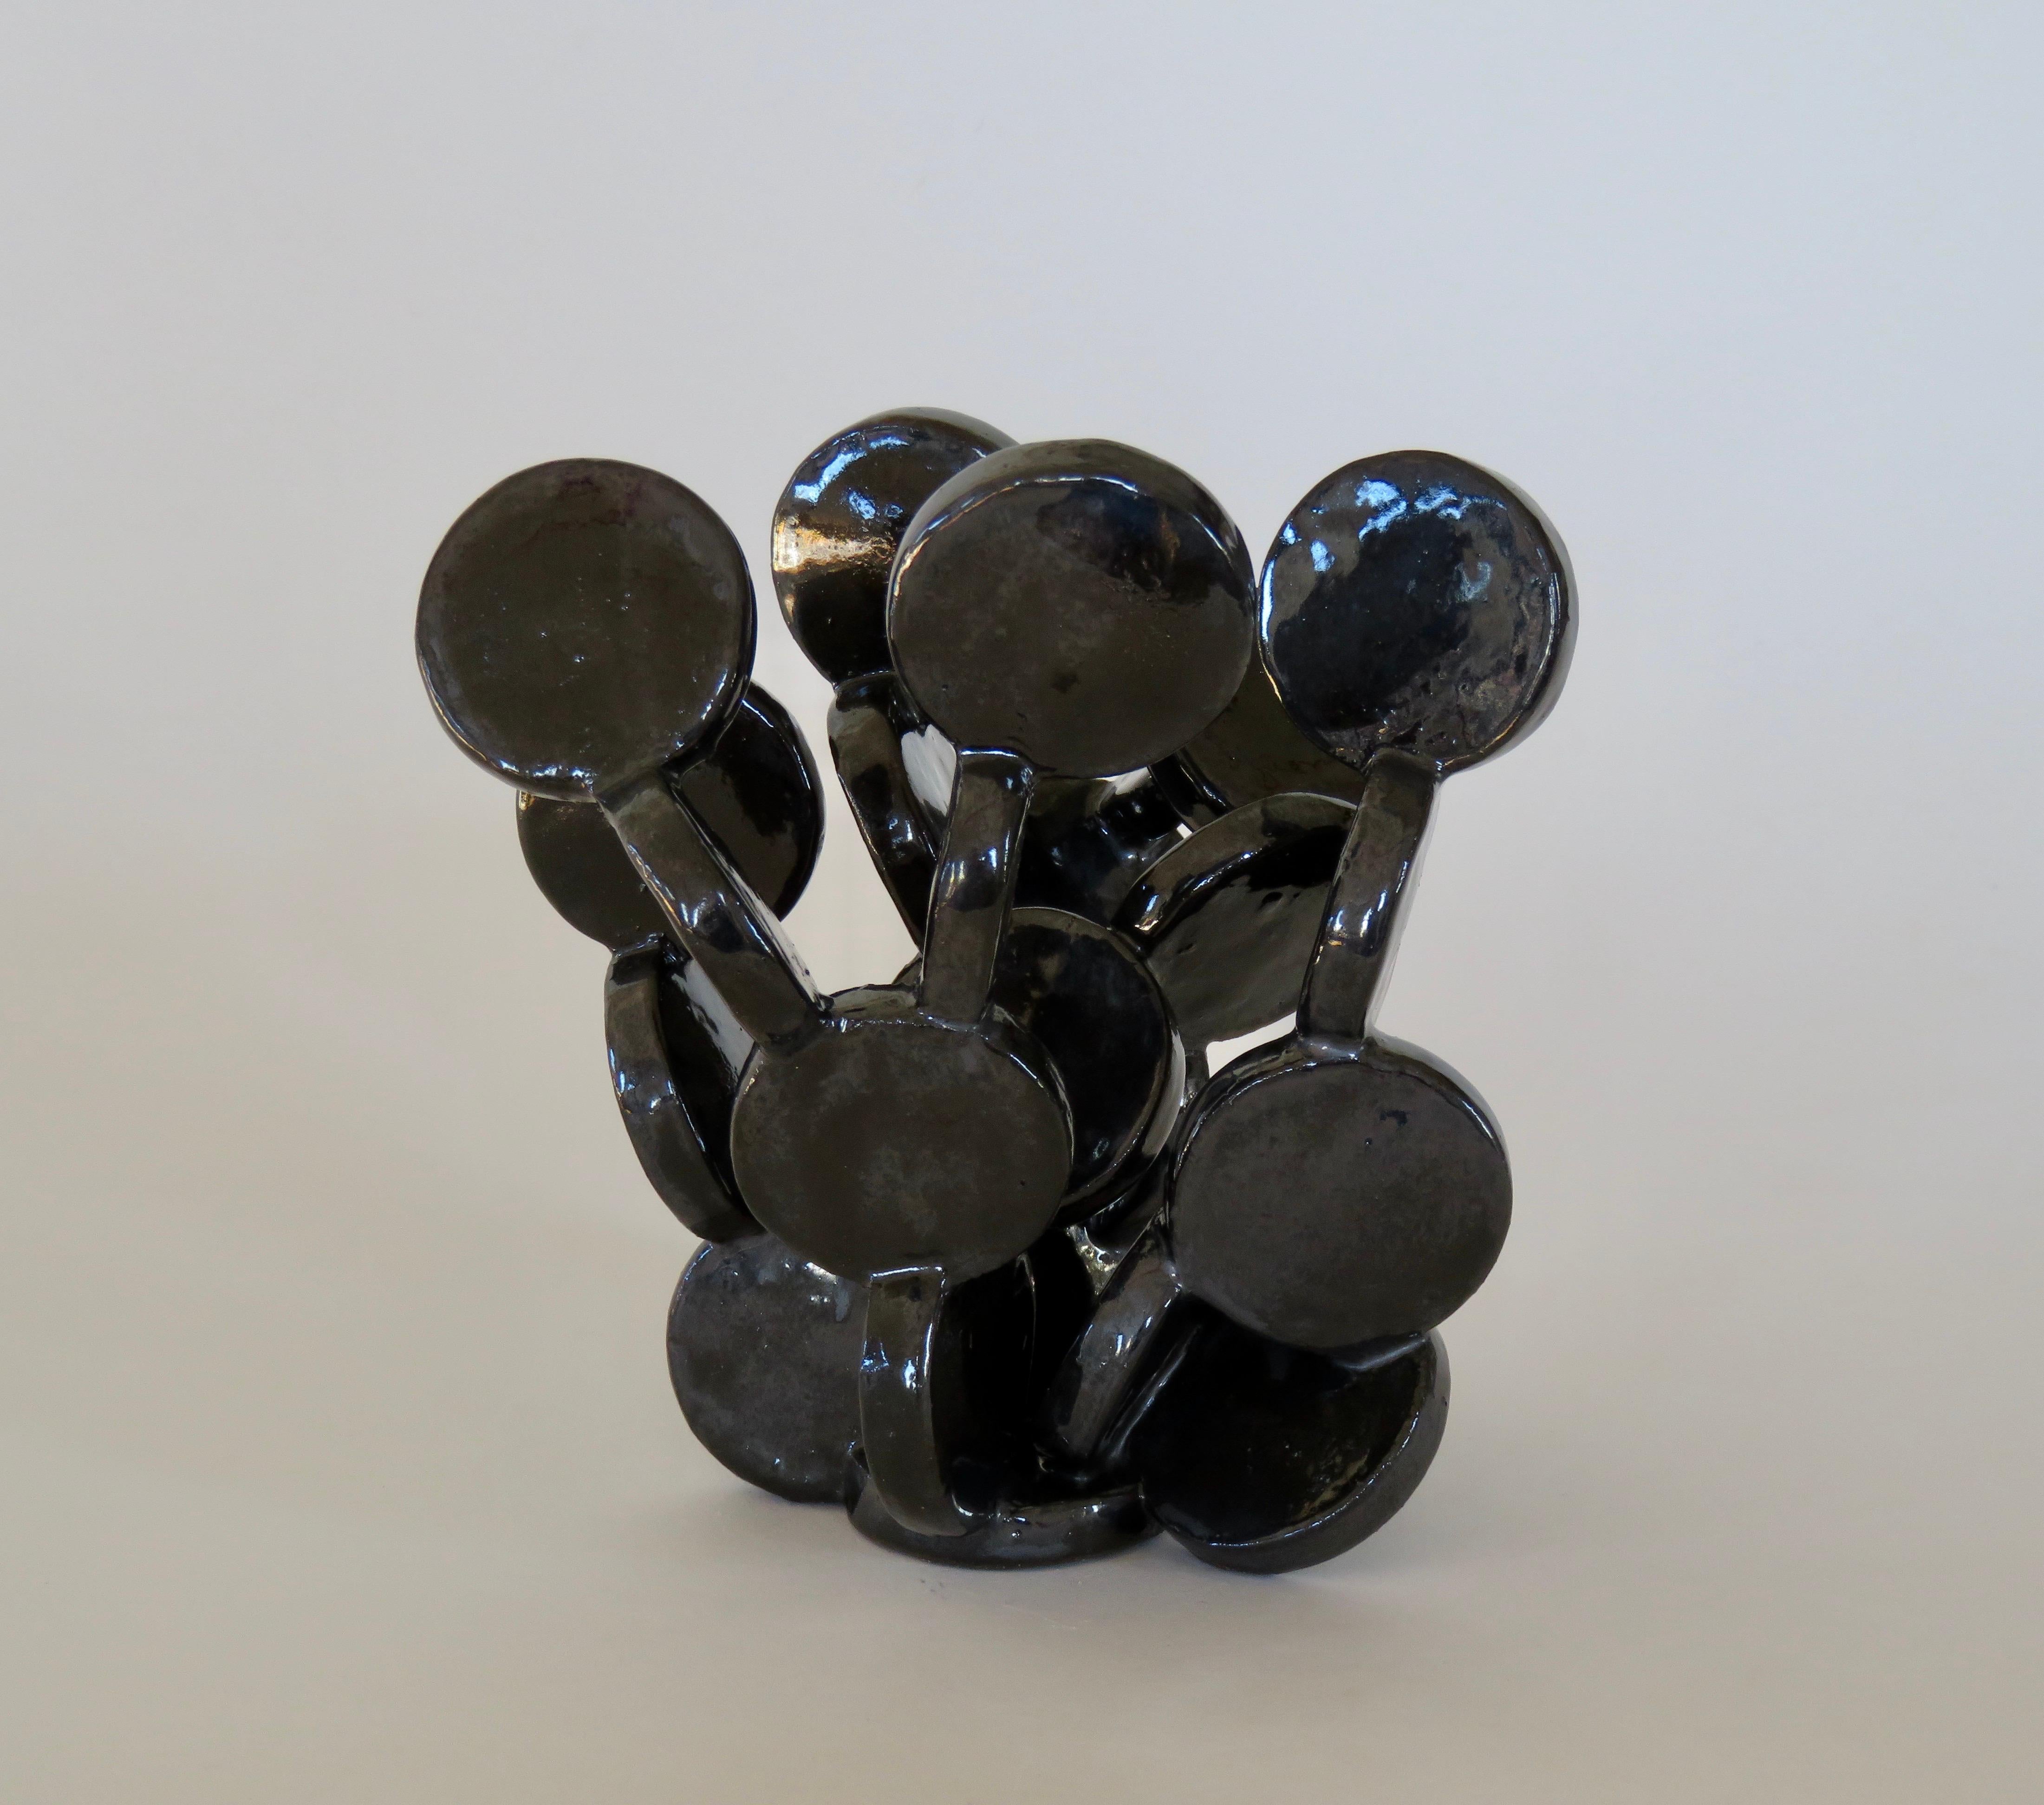 Contemporary Shiny Black Discs, Handbuilt Abstract Ceramic Sculpture